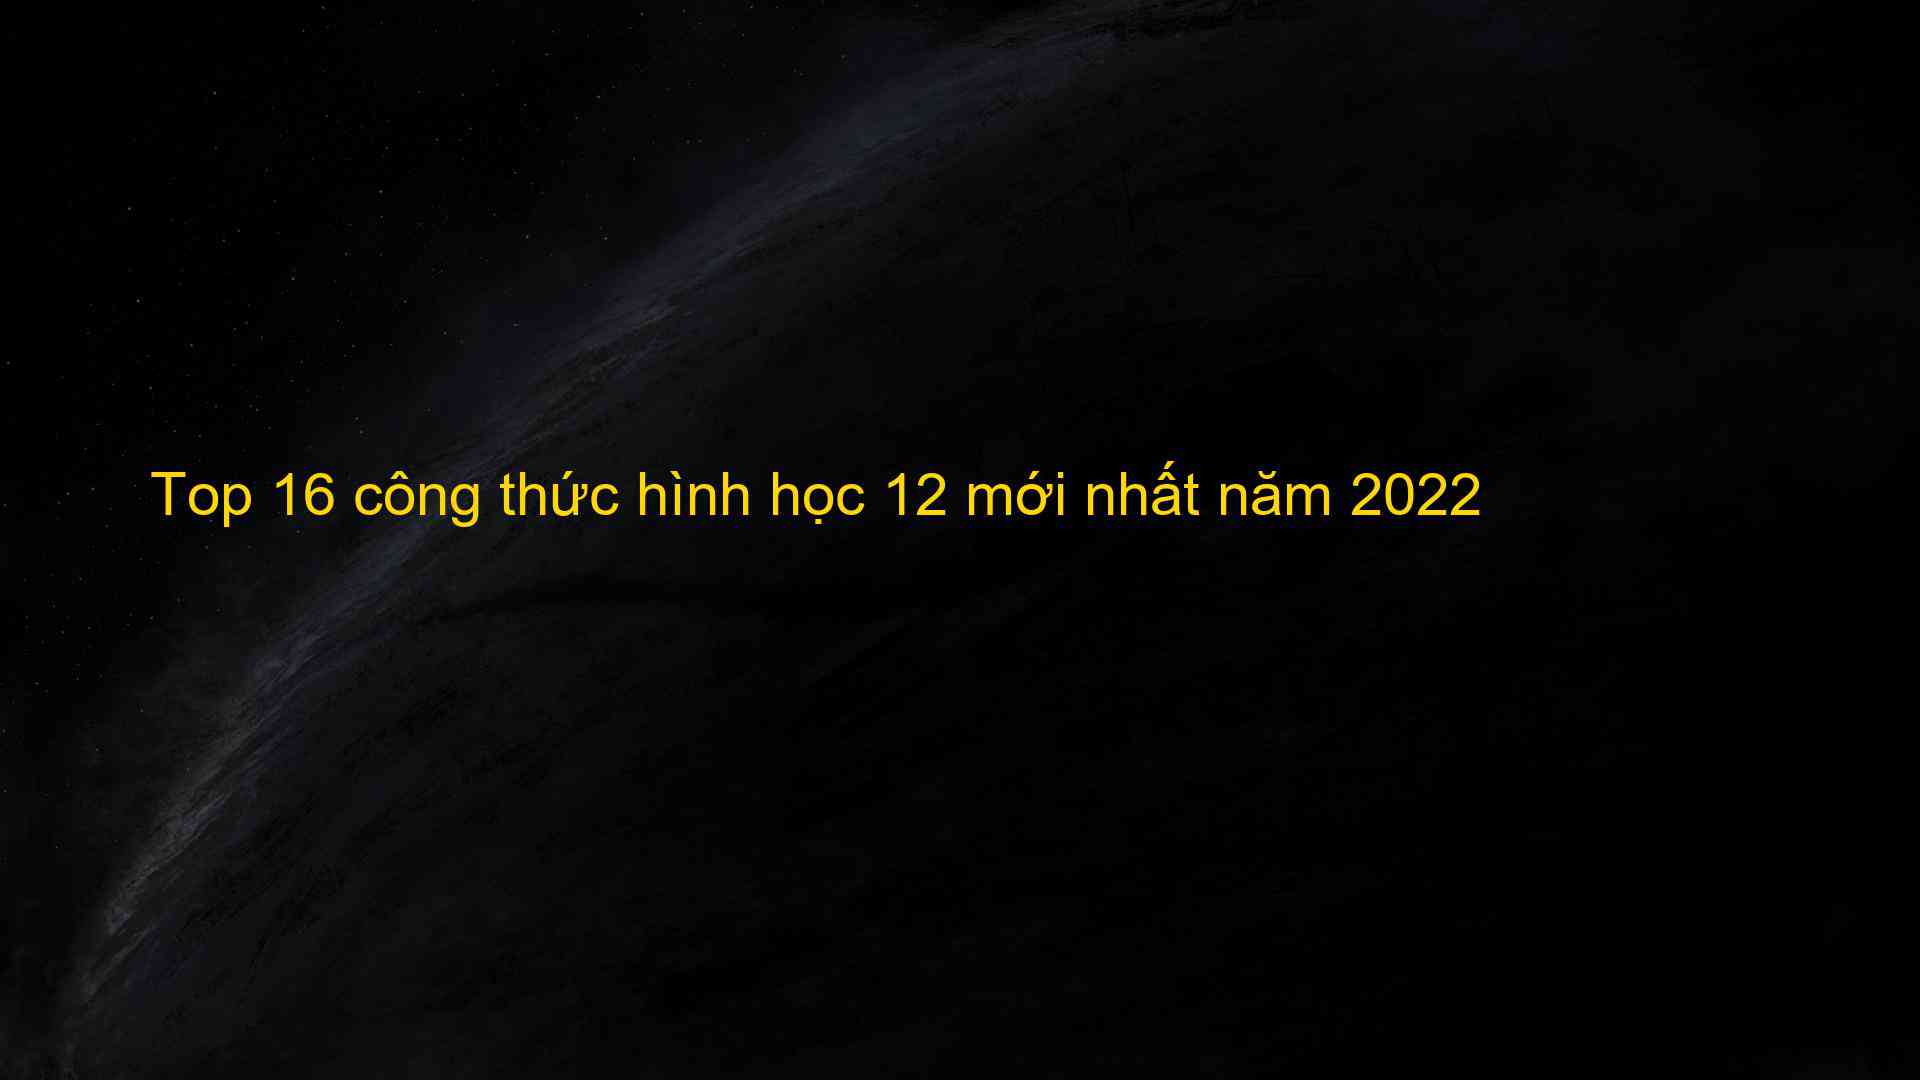 Top 16 cong thuc hinh hoc 12 moi nhat nam 2022 1659707521